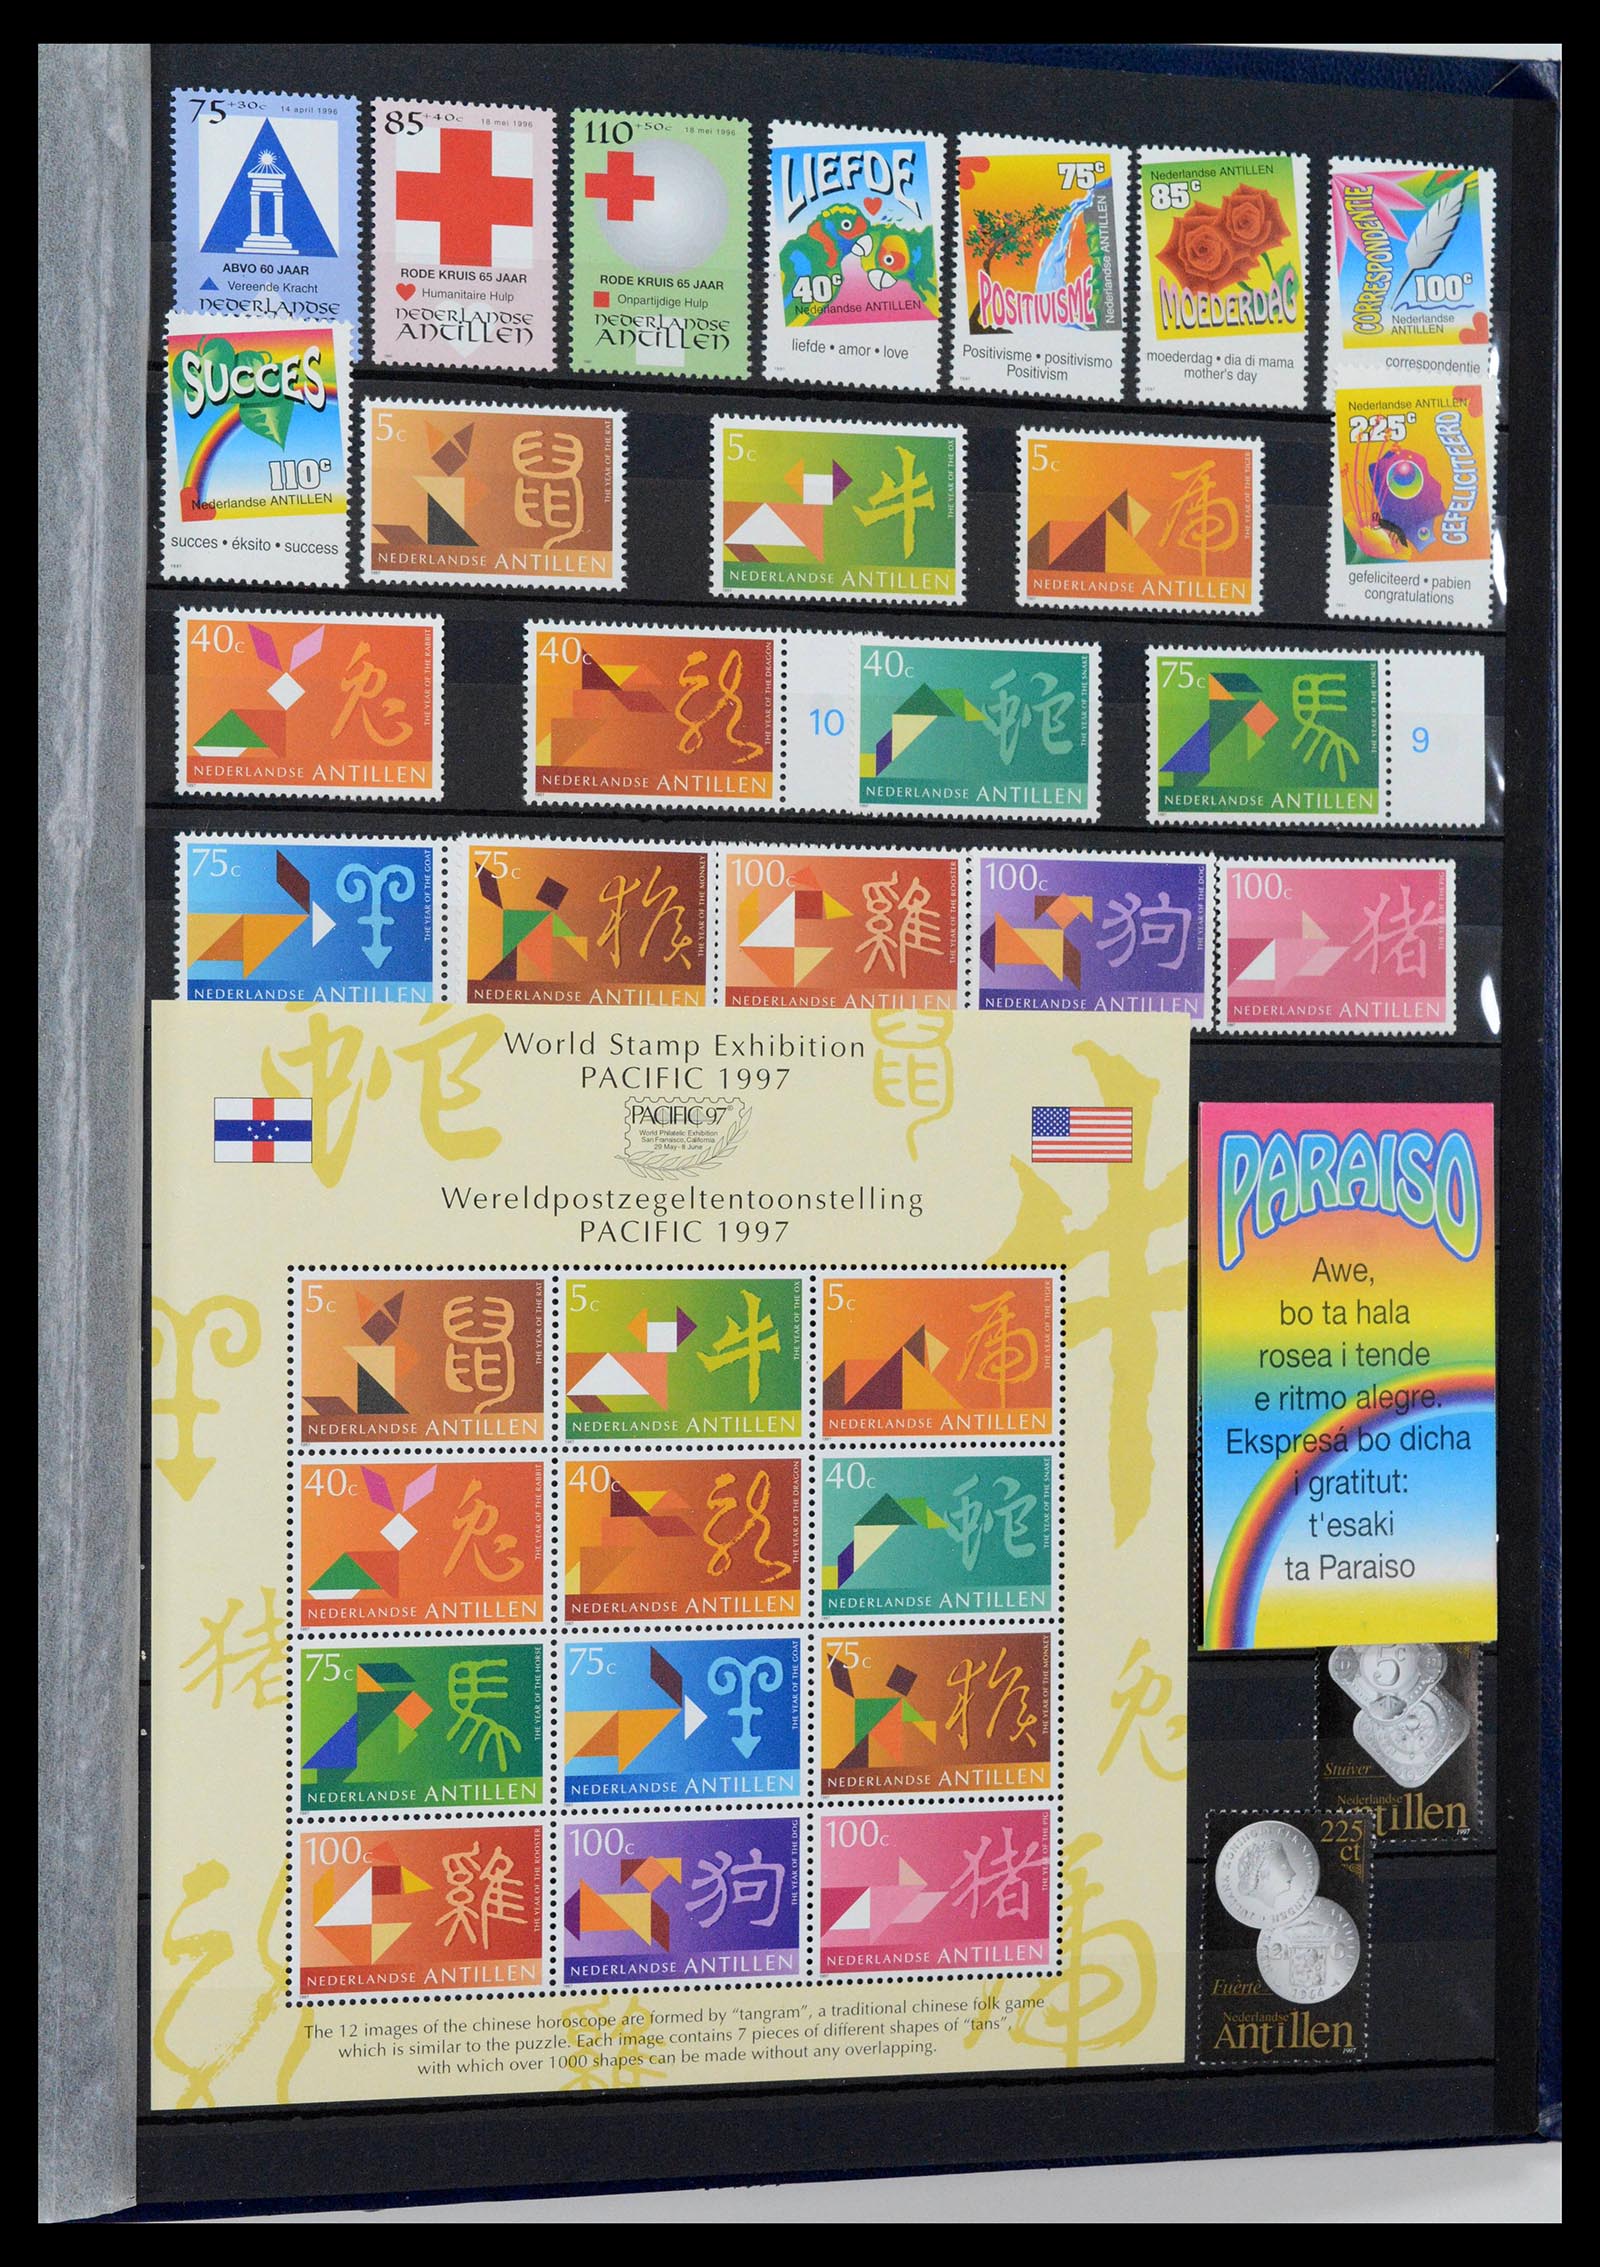 39027 0054 - Stamp collection 39027 Curaçao/Antilles/Aruba 1873-2009.